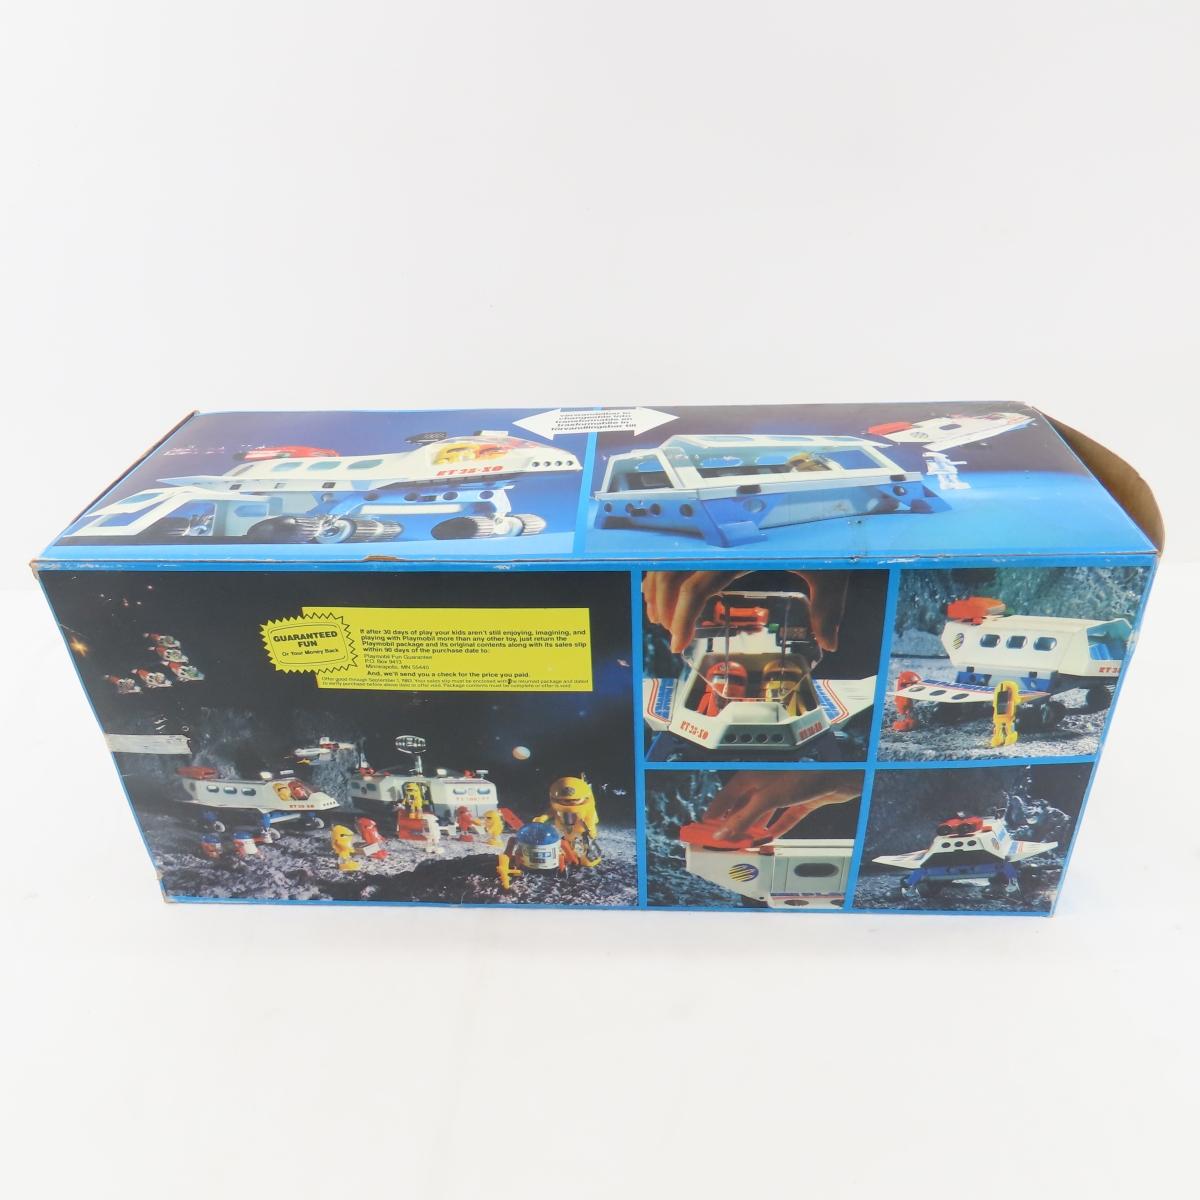 2 Vintage Playmobil Sets in Box